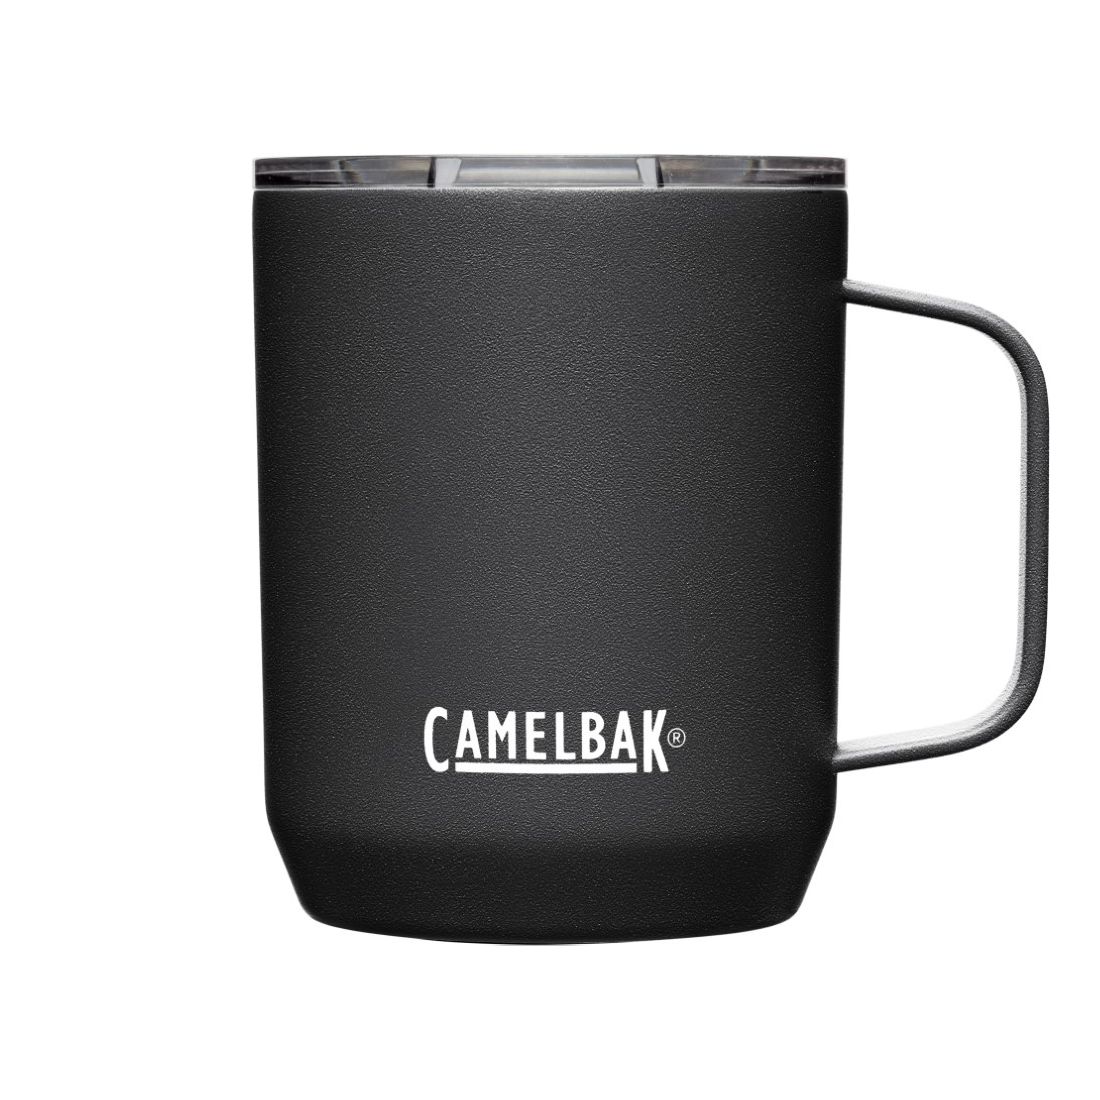 Camelbak Camp Mug Stainless Steel Vacuum Insulated 12Oz black